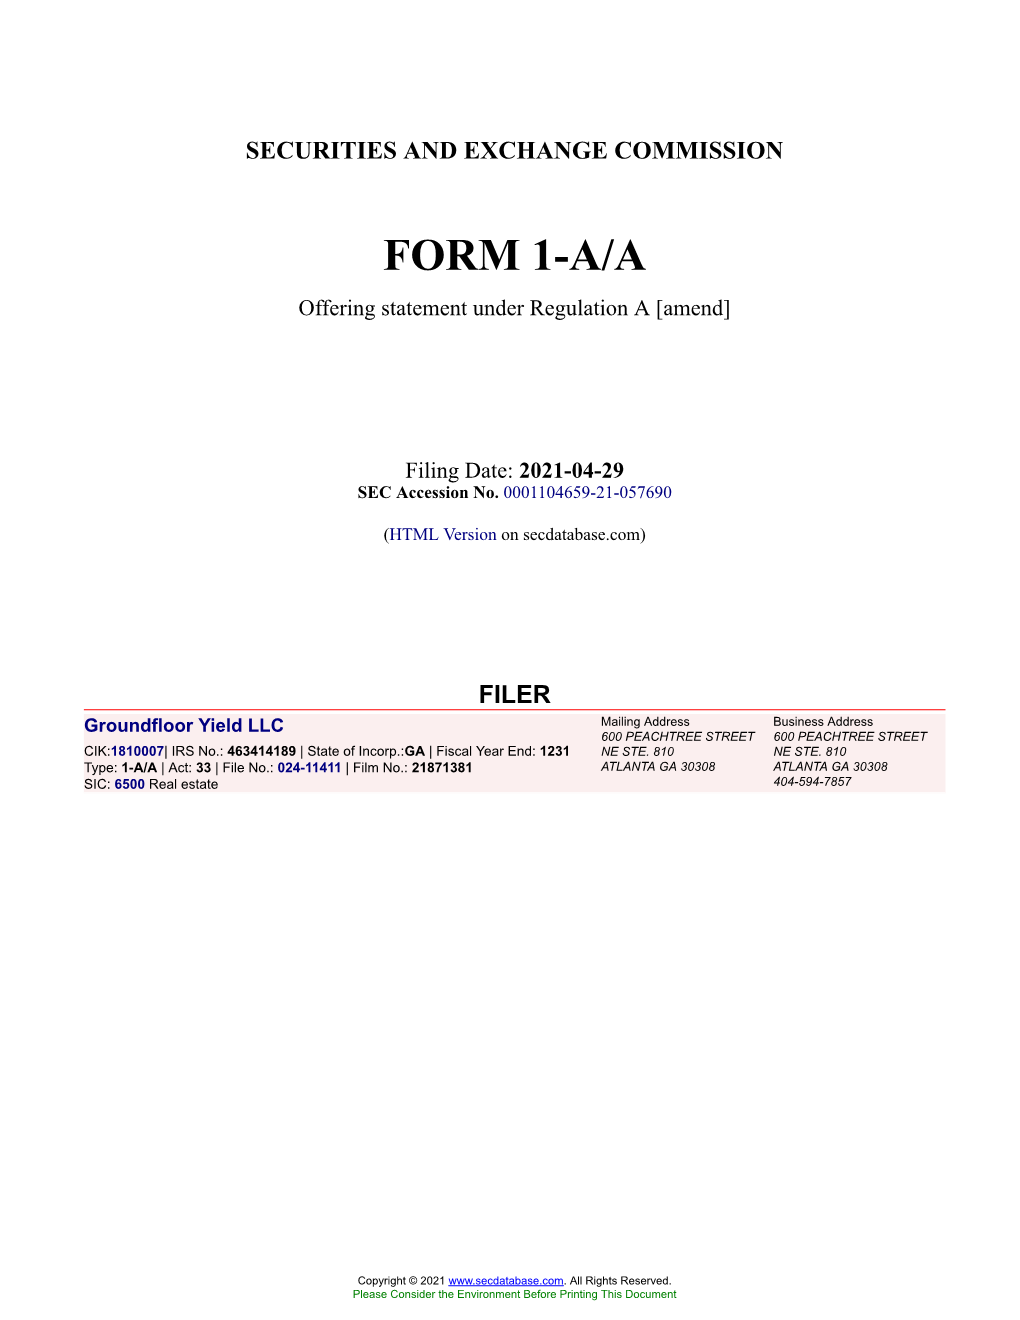 Groundfloor Yield LLC Form 1-A/A Filed 2021-04-29